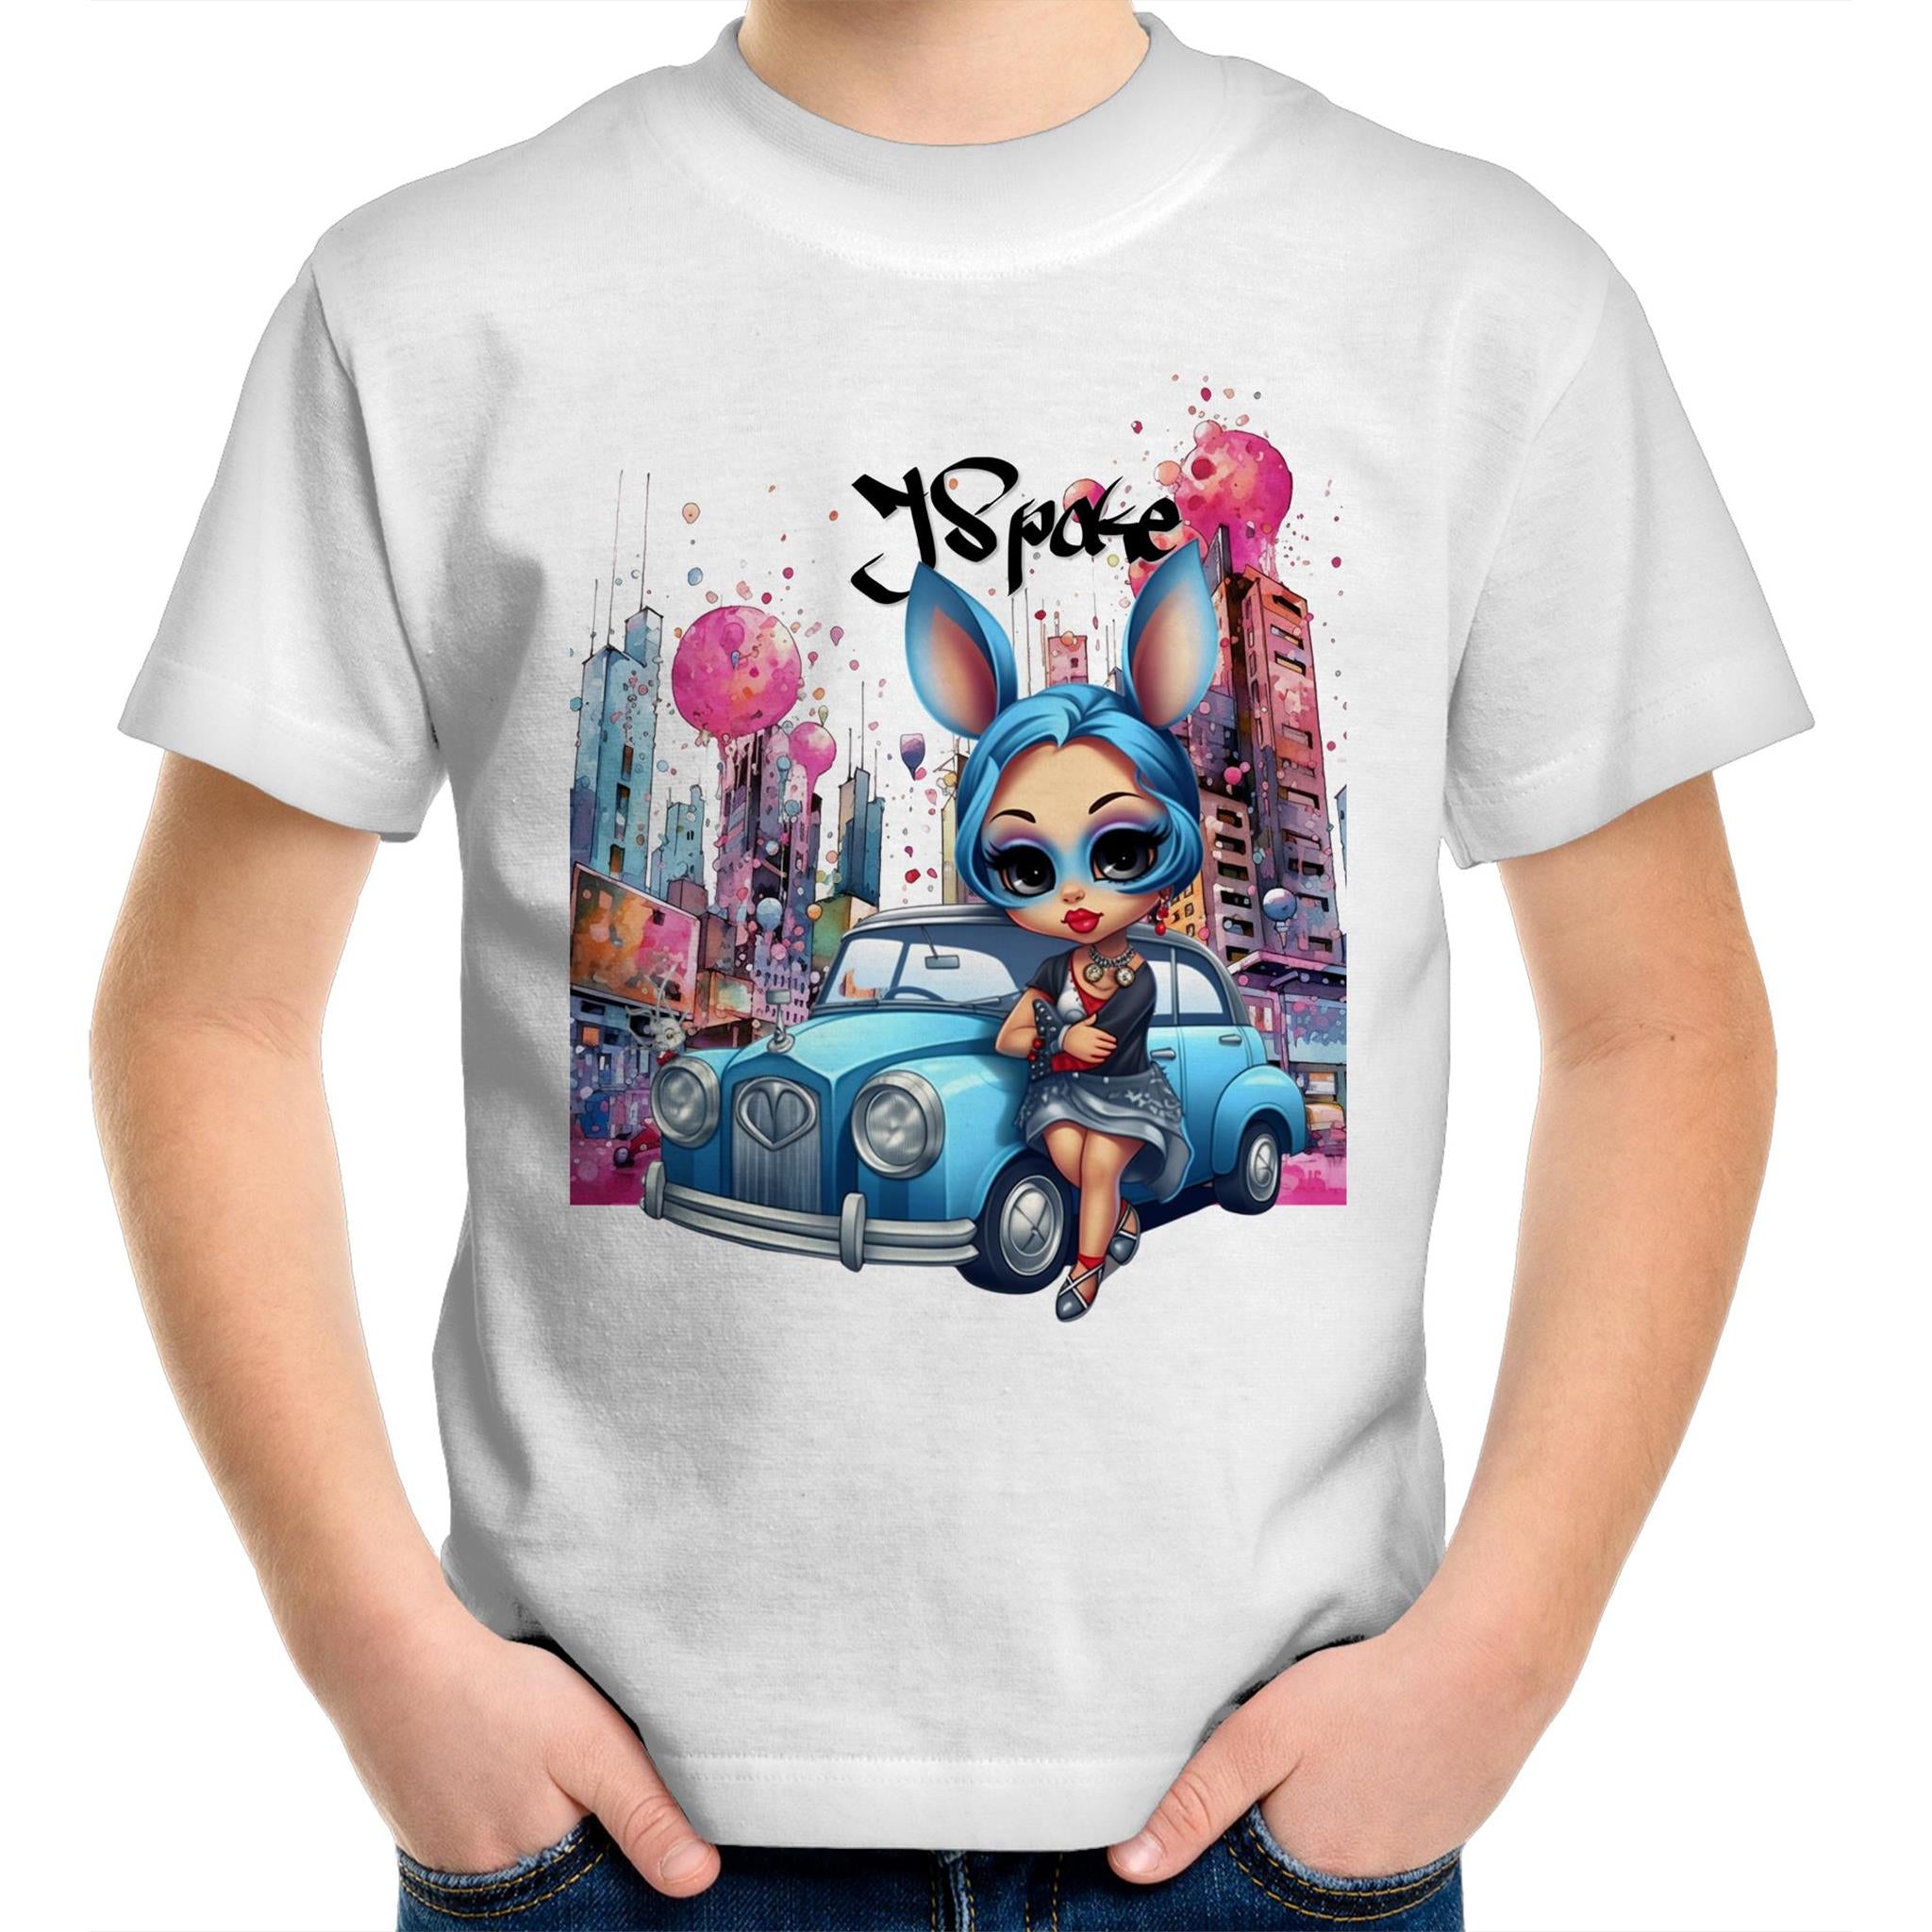 BUNNY CHIC - Kids Youth T-Shirt - JSPOKE